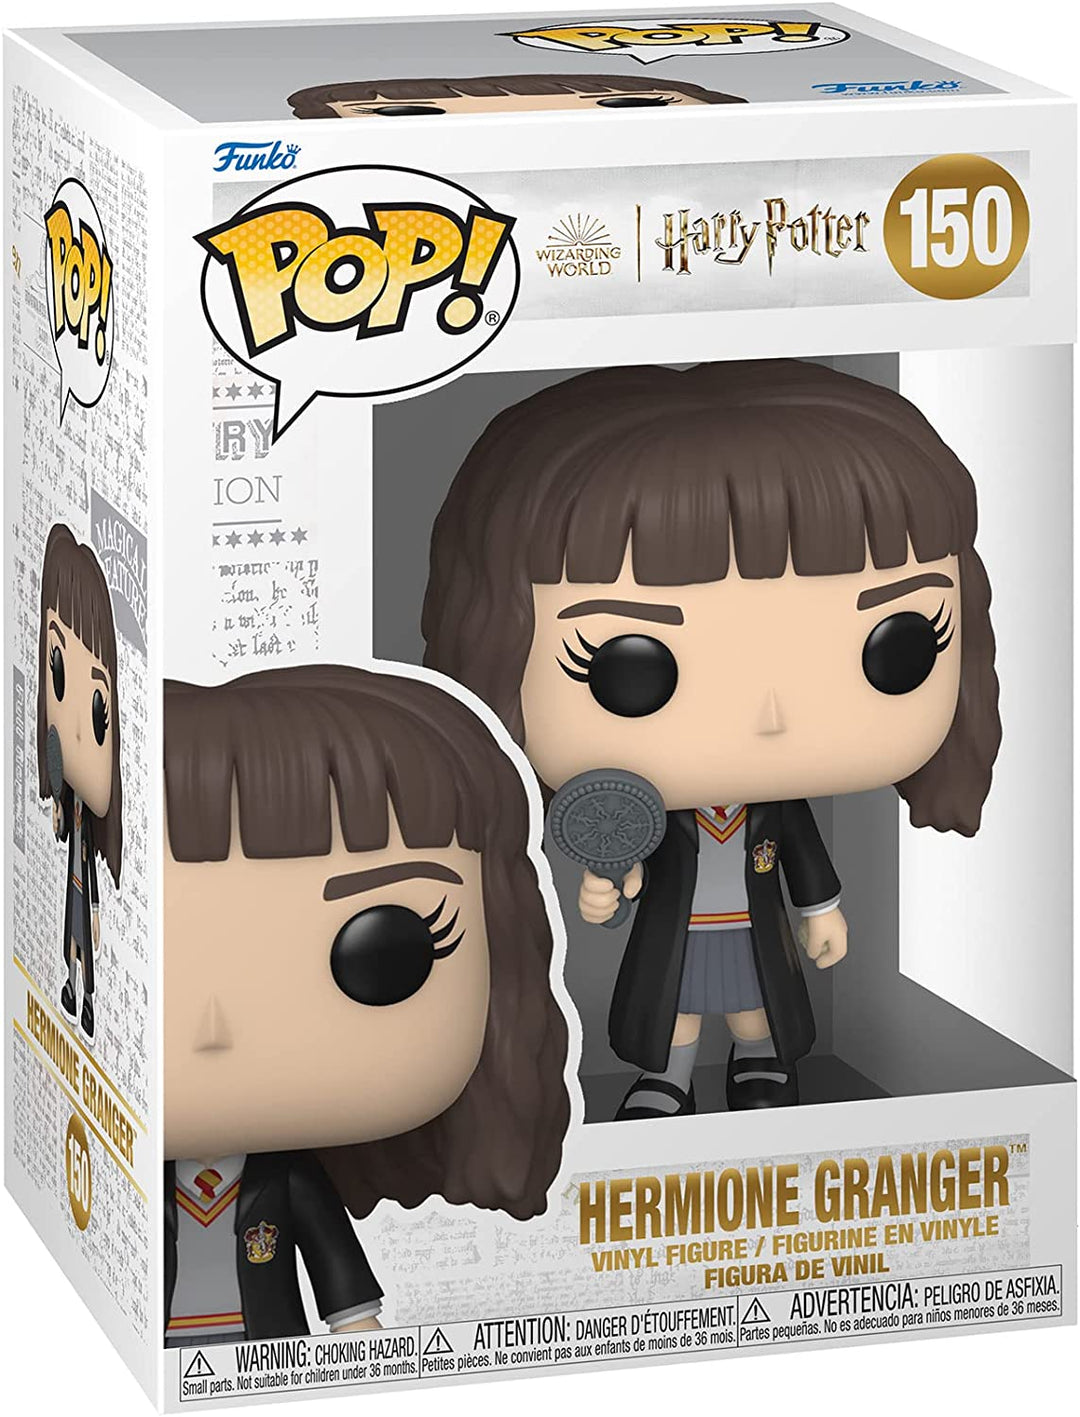 Harry Potter: Chamber of Secrets 20th Anniversary - Hermione Granger Funko 65653 Pop! Vinyl #150